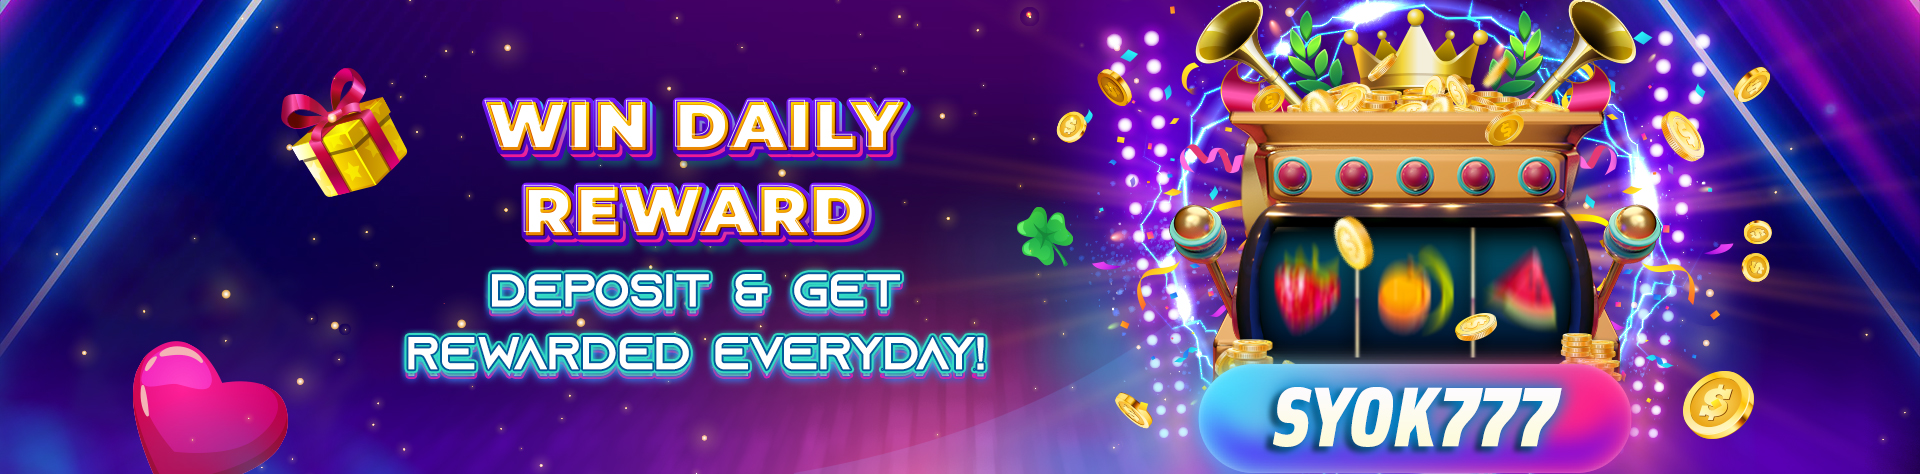 Win-Daily-Reward.jpg